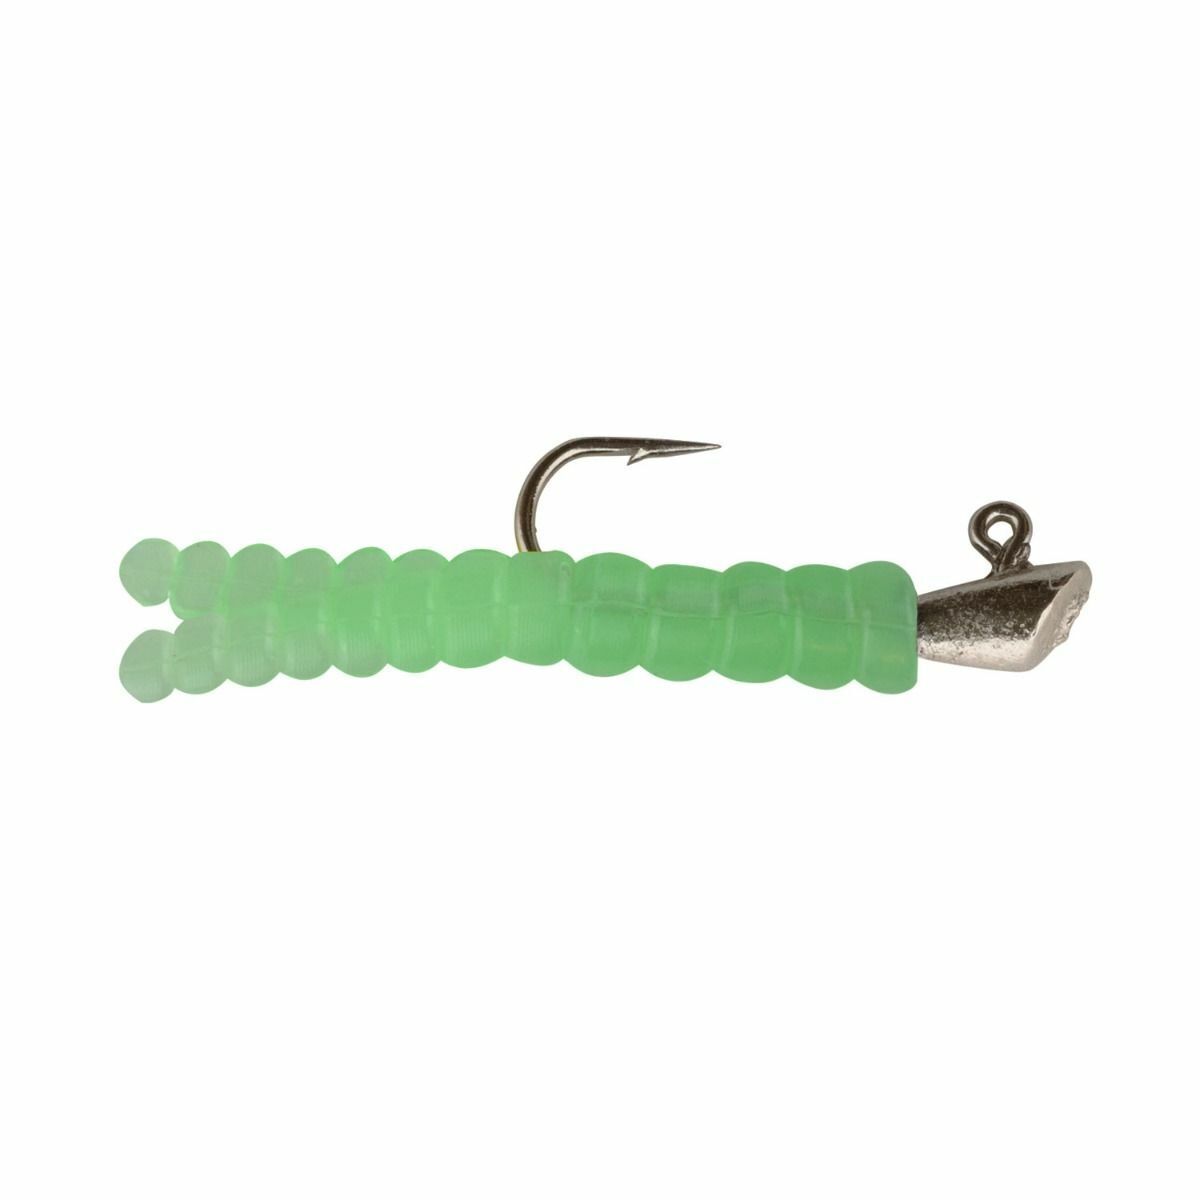 2 Packs Leland's Trout Magnet Jig Lures Plastic Fishing Baits Mint Green